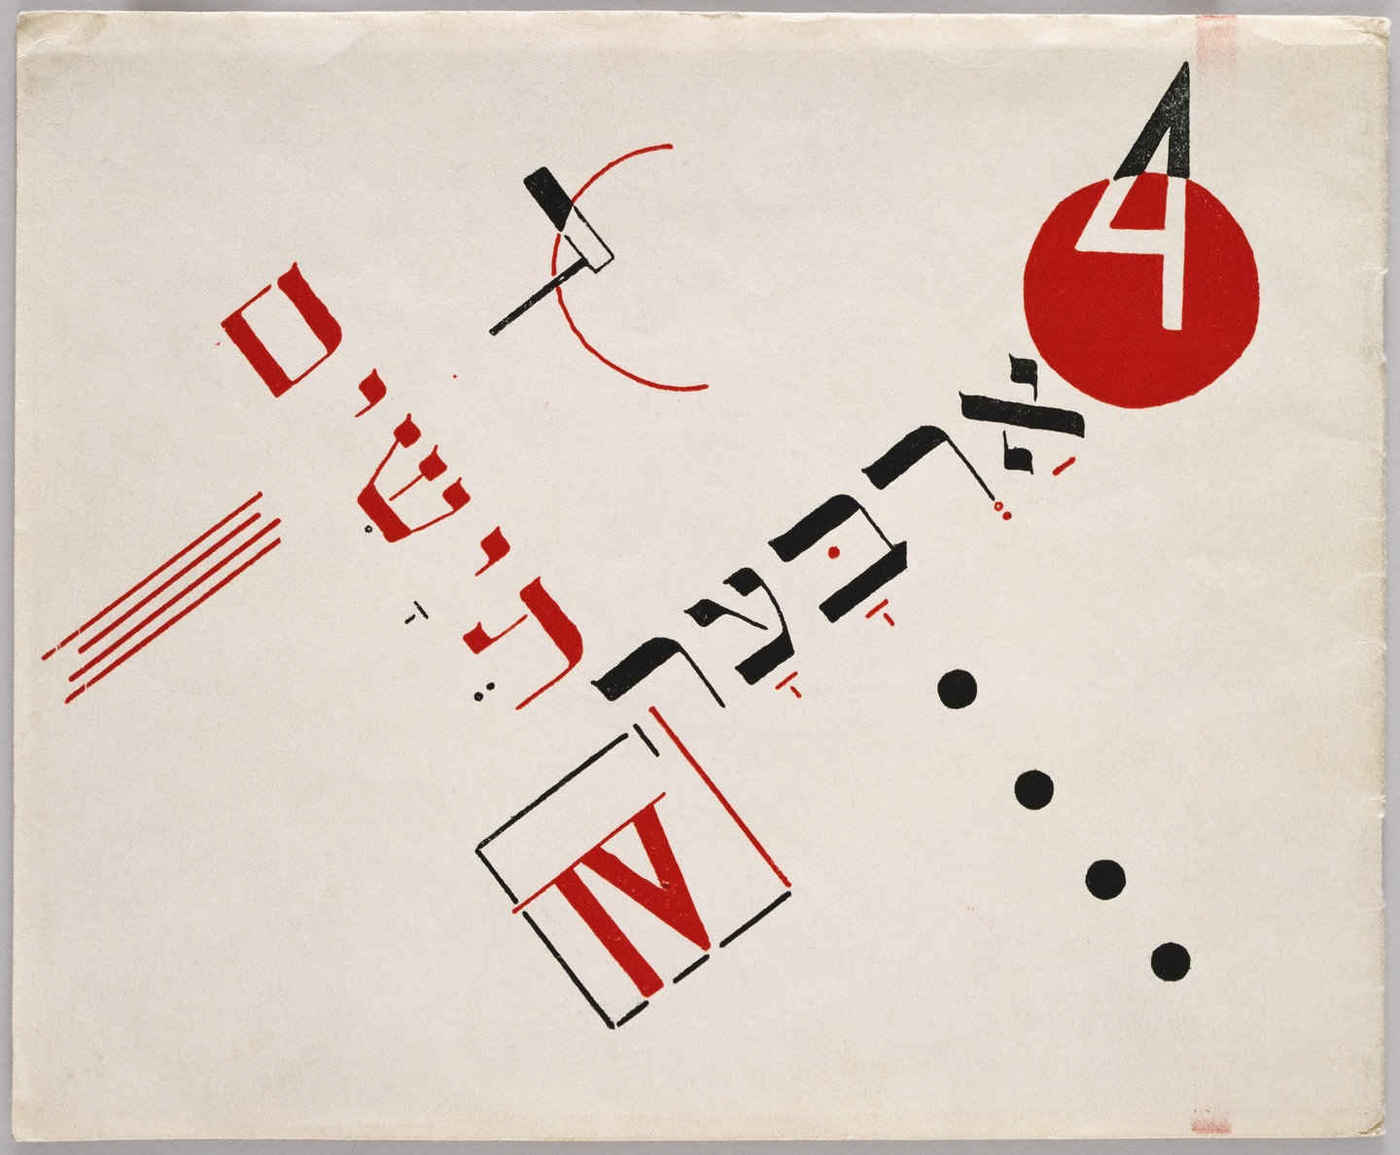 “Four Billy Goats”, Lissitzky1922